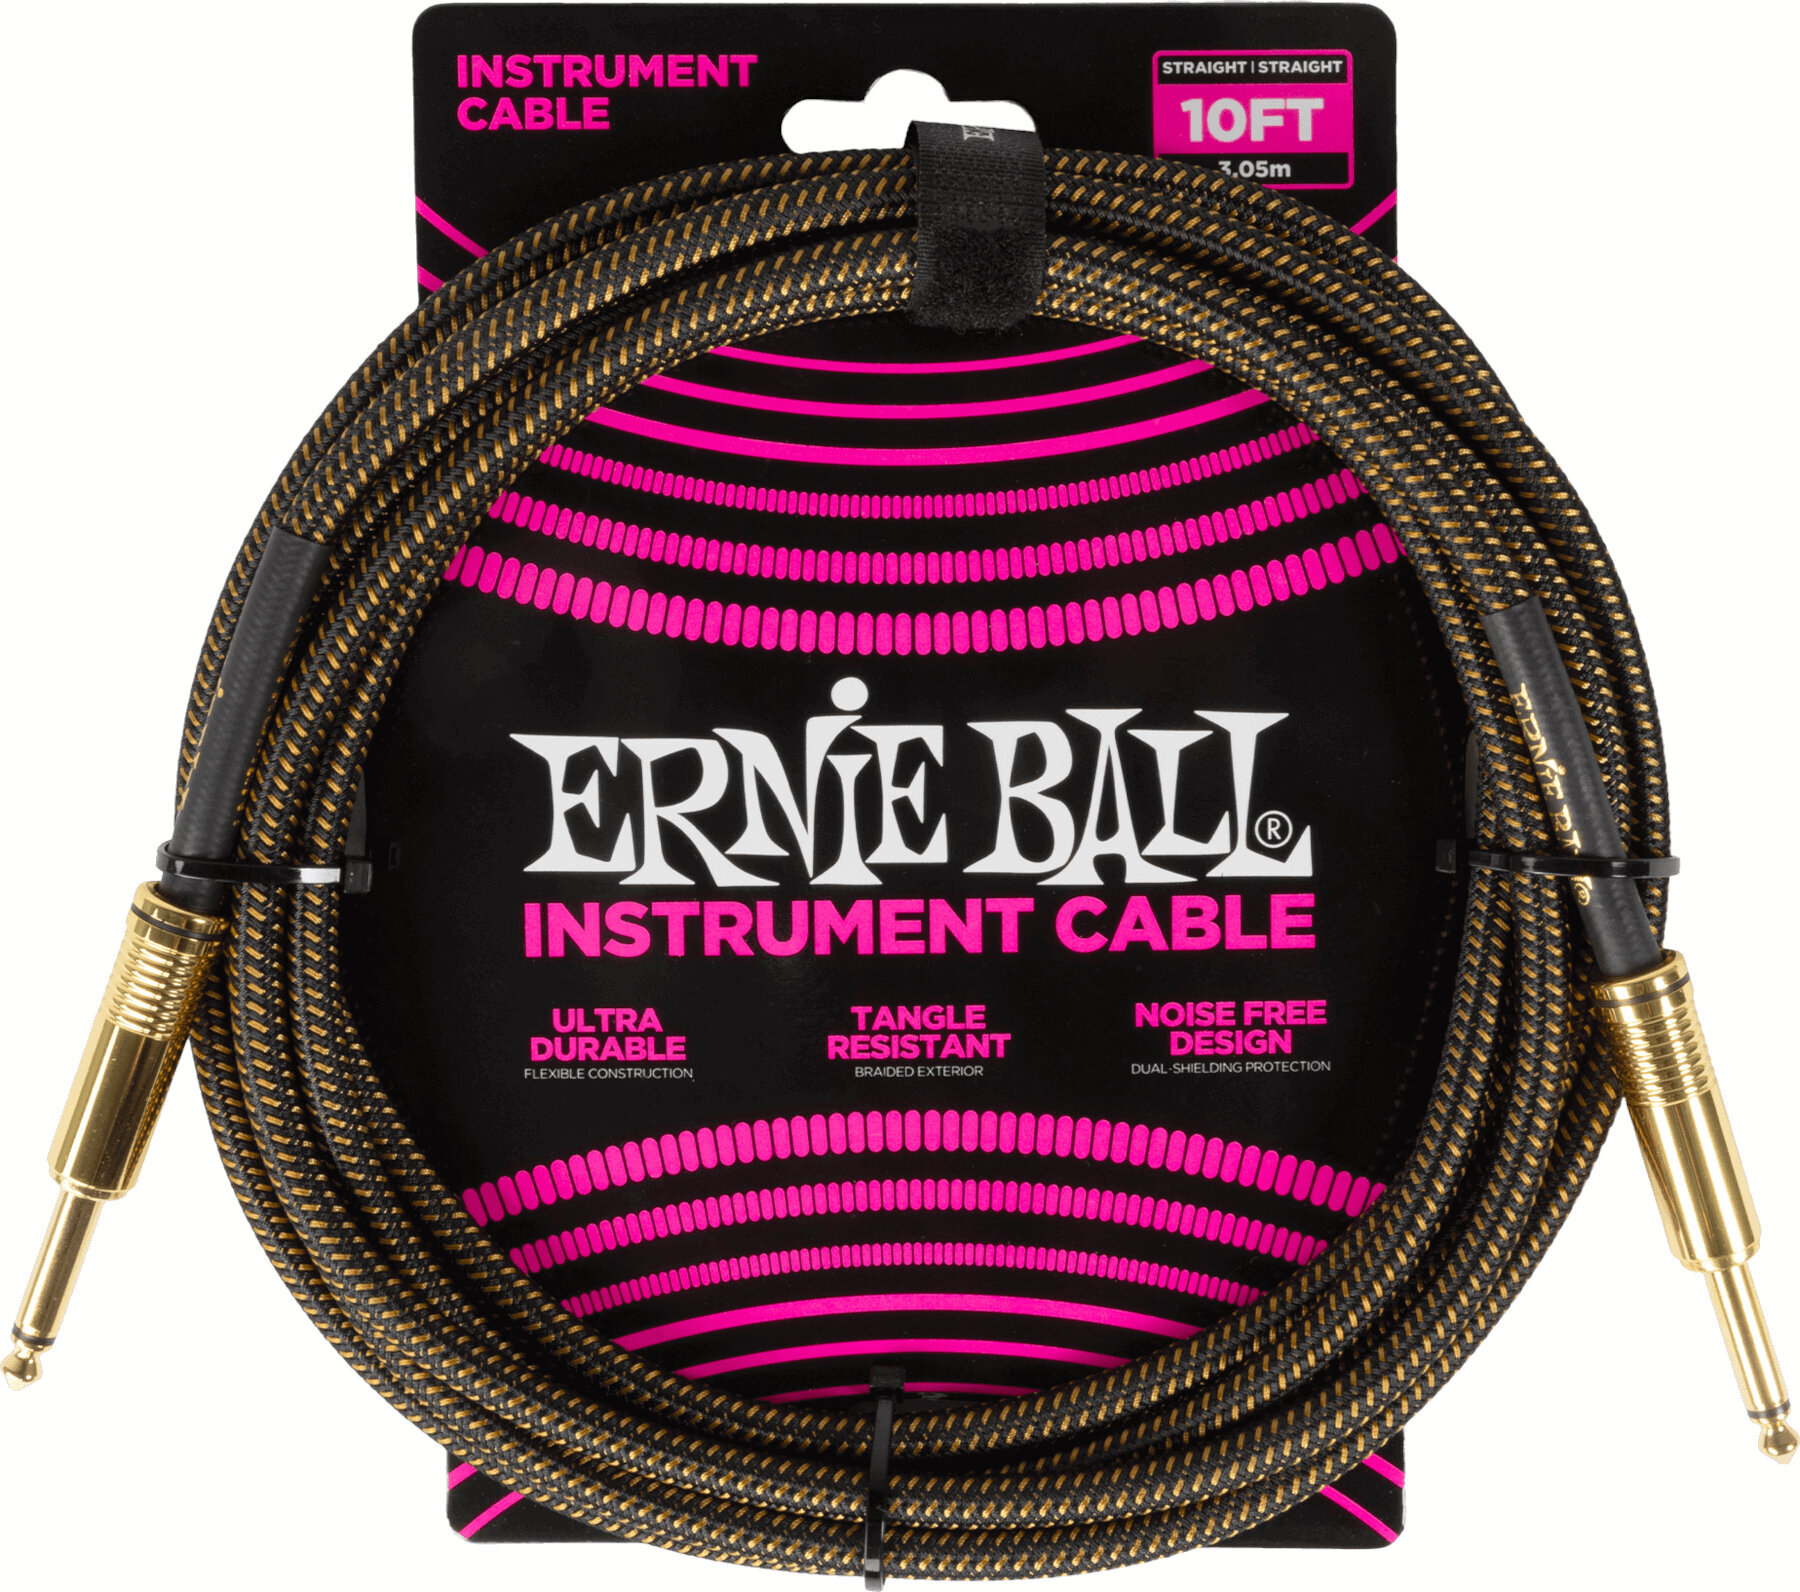 Cable de instrumento Ernie Ball Braided Instrument Cable Straight/Straight Marrón 3 m Recto - Recto Cable de instrumento